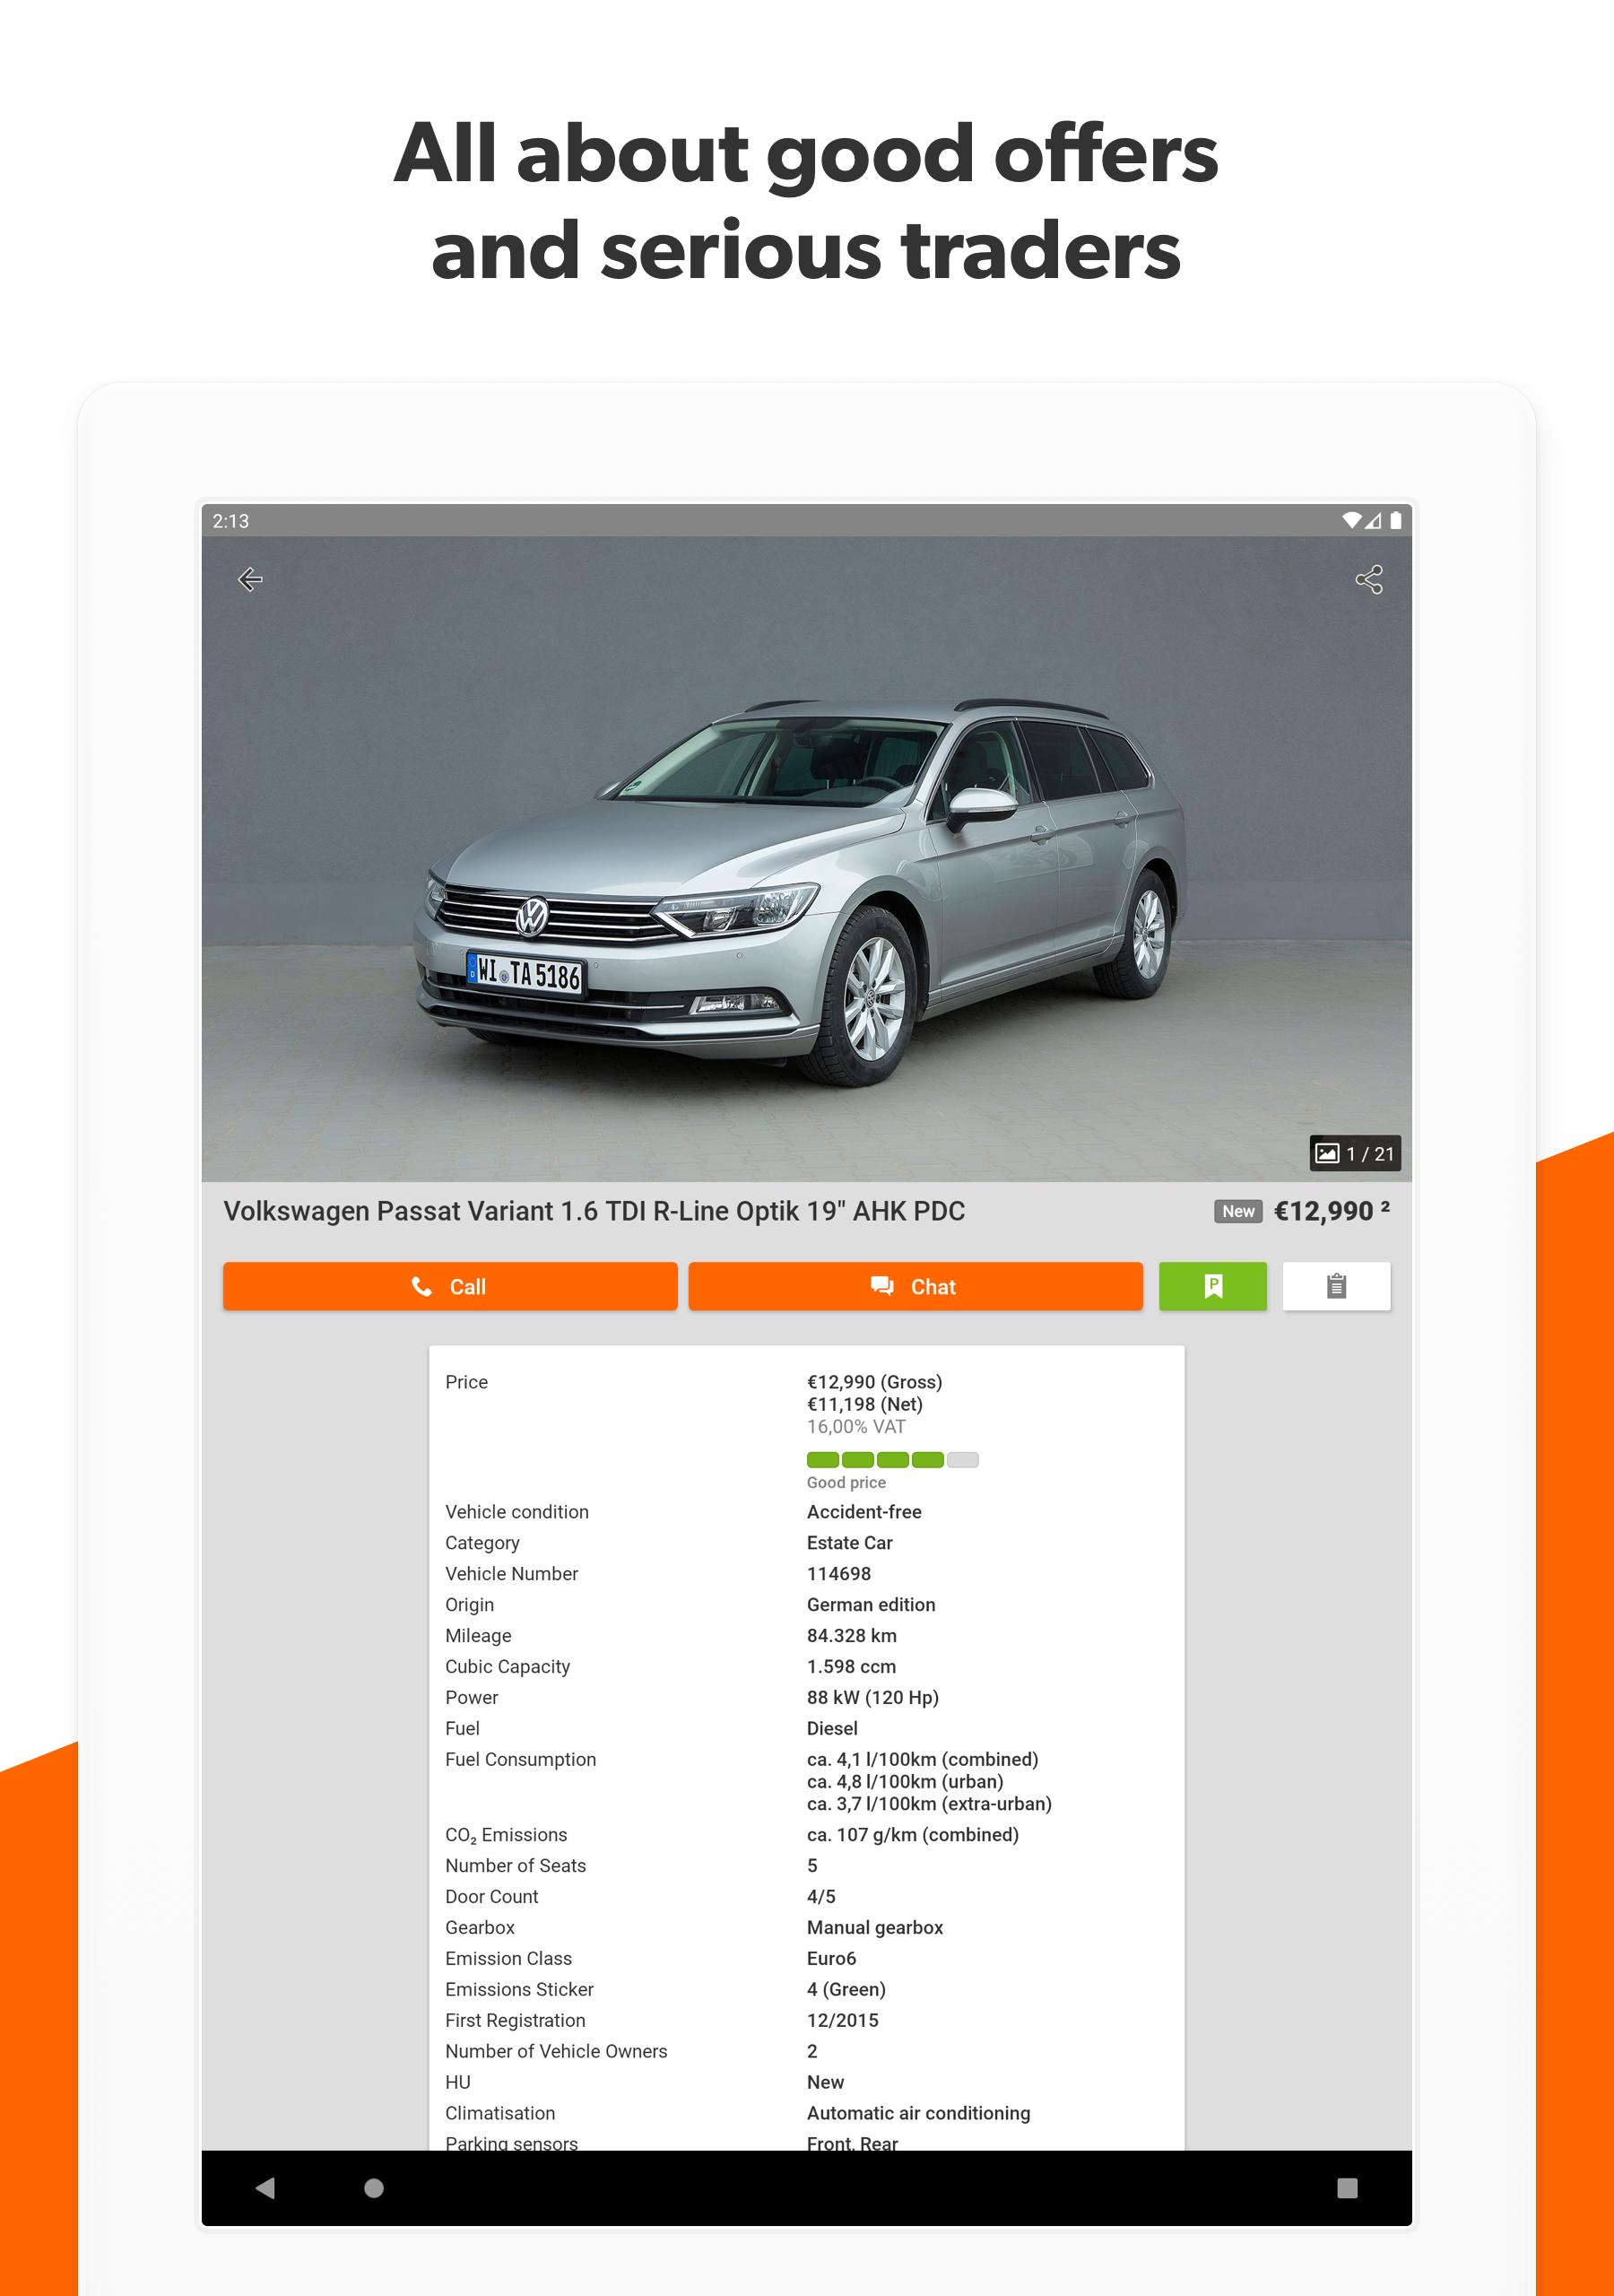 mobile.de – Germany‘s largest car market 8.15.2 Screenshot 18